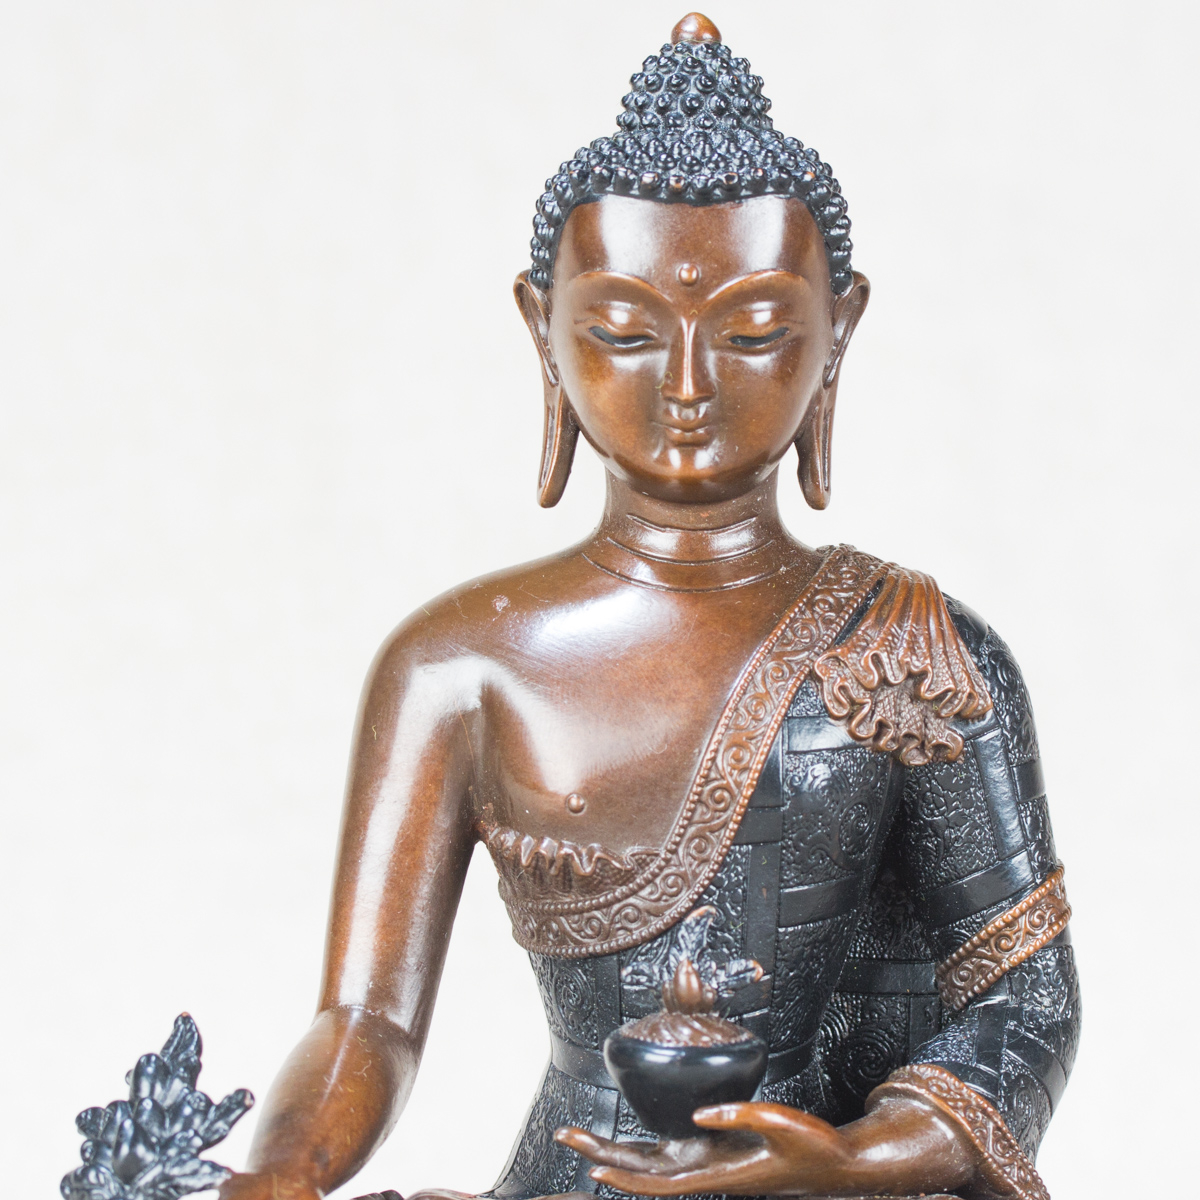 Статуэтка Будды Медицины, 16,5 см (discounted)